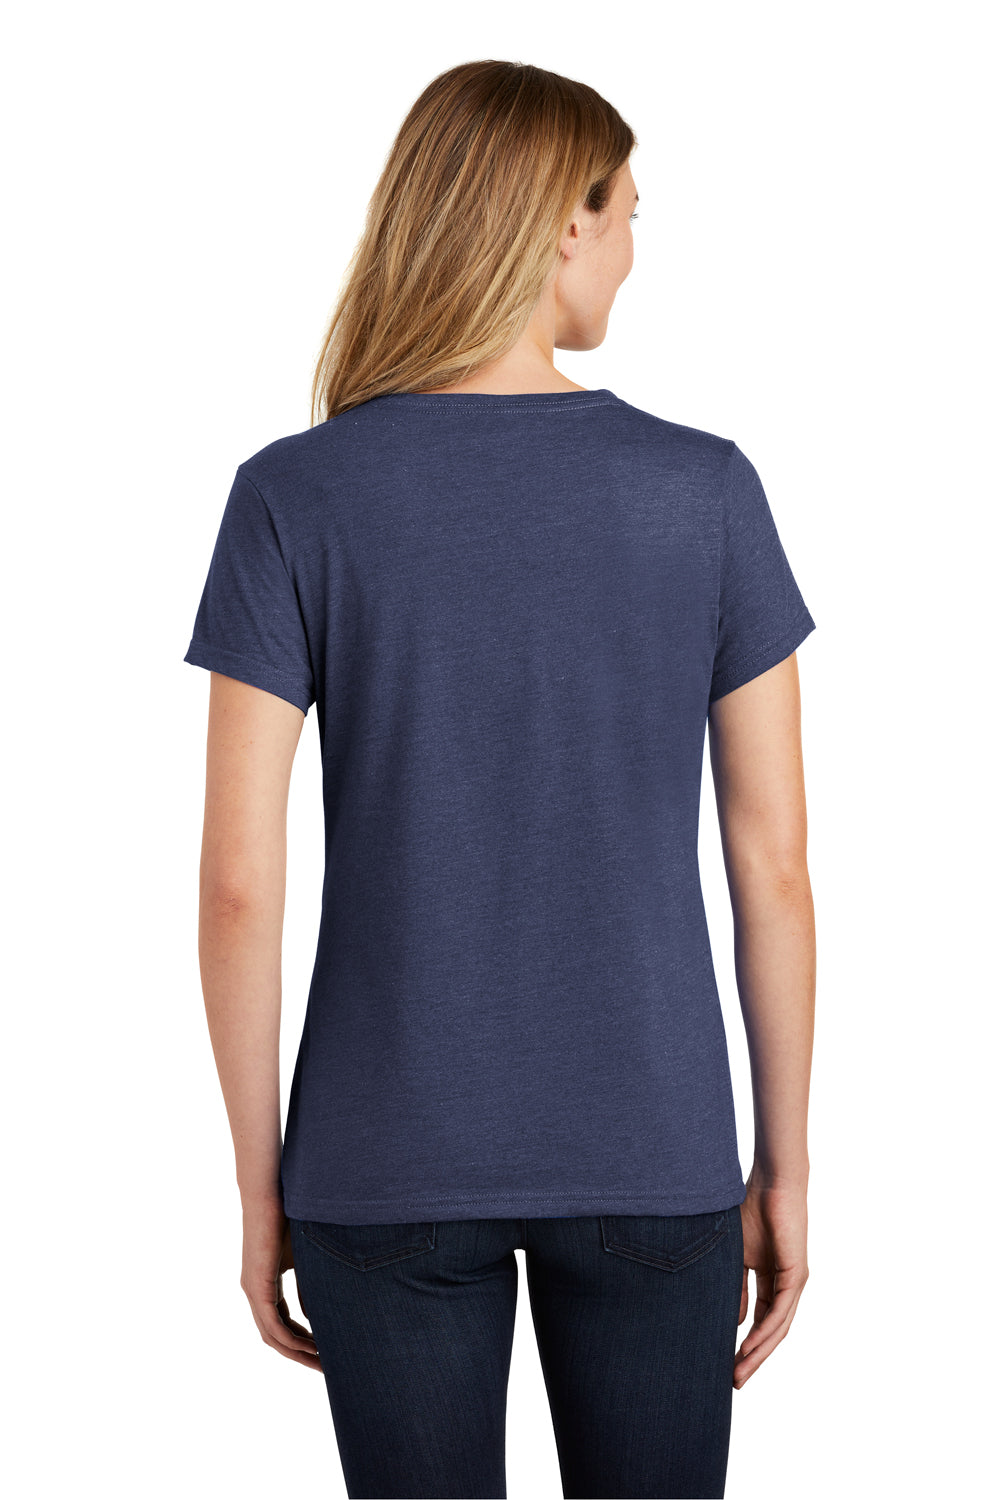 Port & Company LPC455V Womens Fan Favorite Short Sleeve V-Neck T-Shirt Heather Navy Blue Back